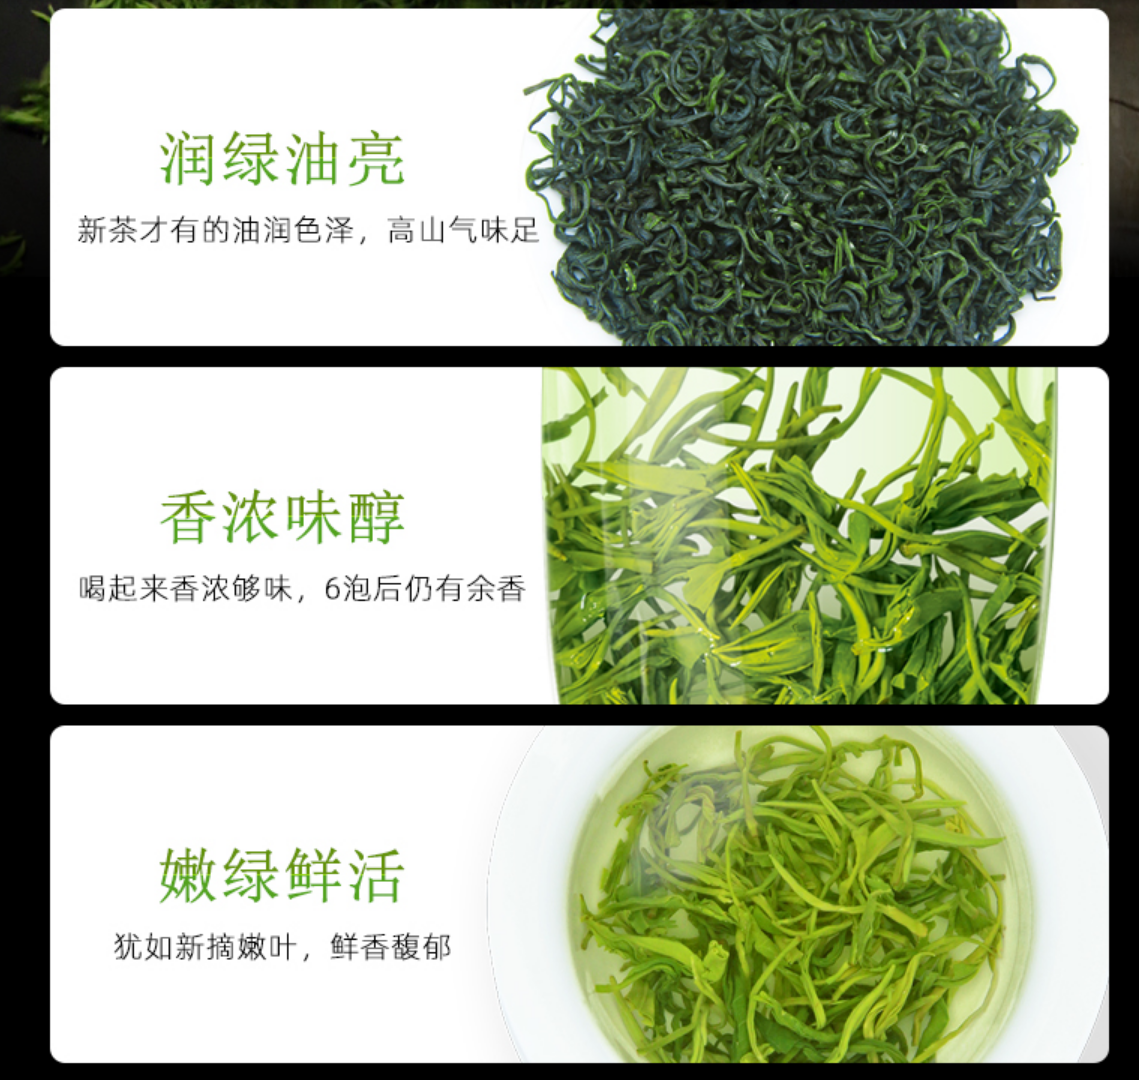 2020 New Green Tea Sichuan Maojian Tea 5